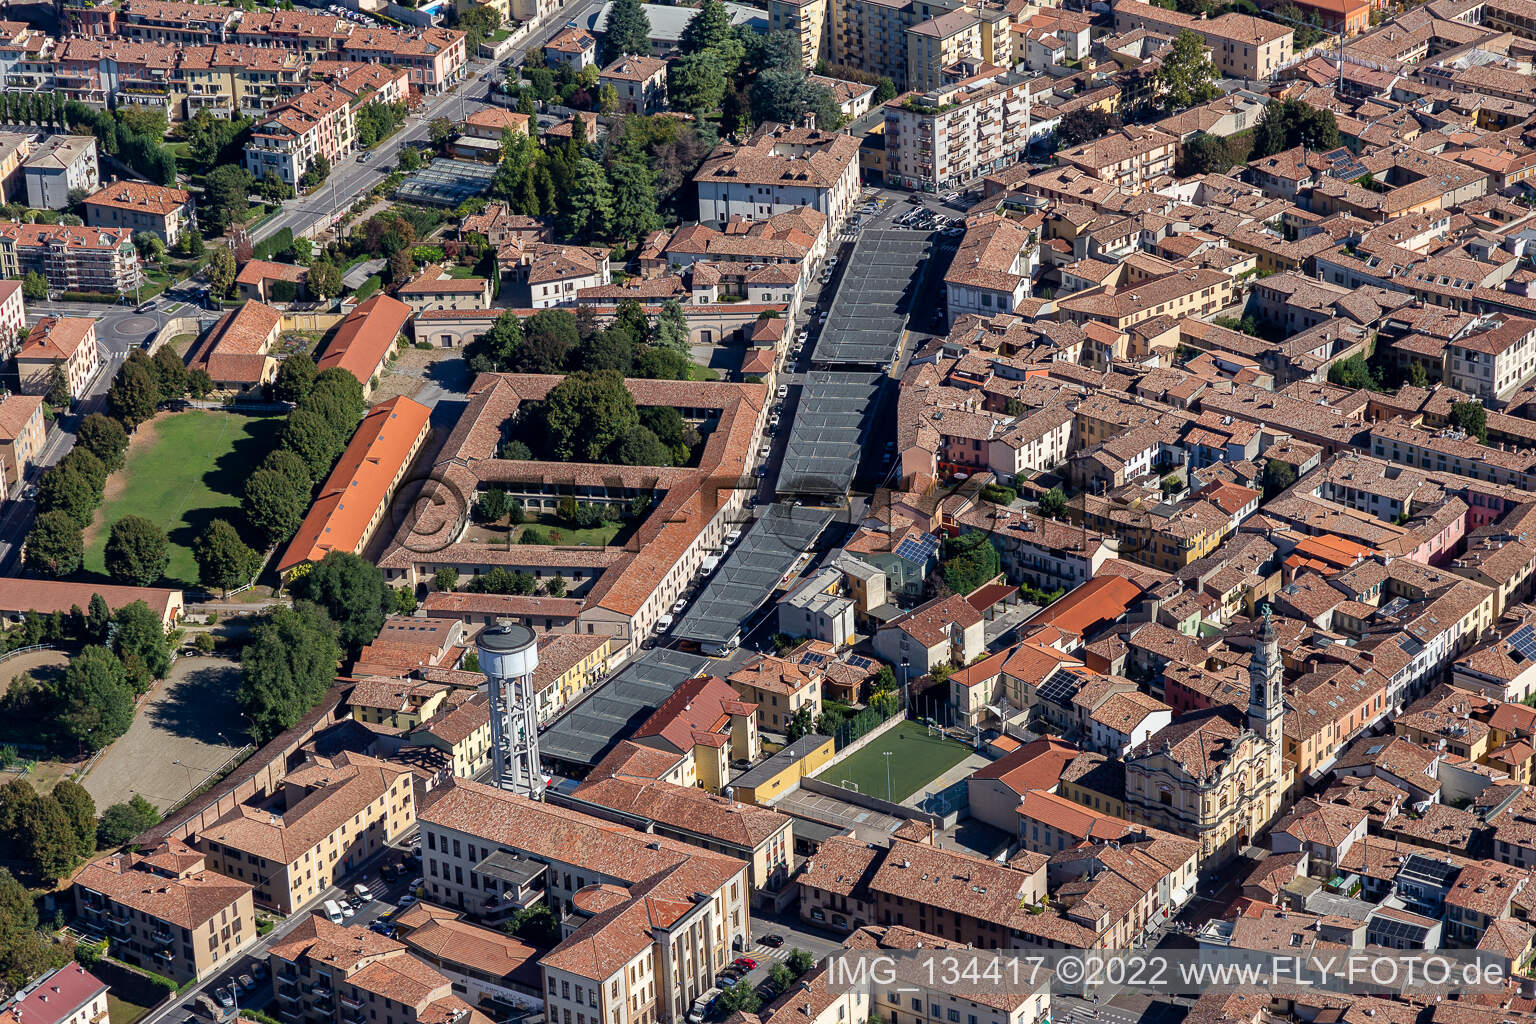 Luftbild von Mercato Coperto, Via Giuseppe Verdi in Crema im Bundesland Cremona, Italien